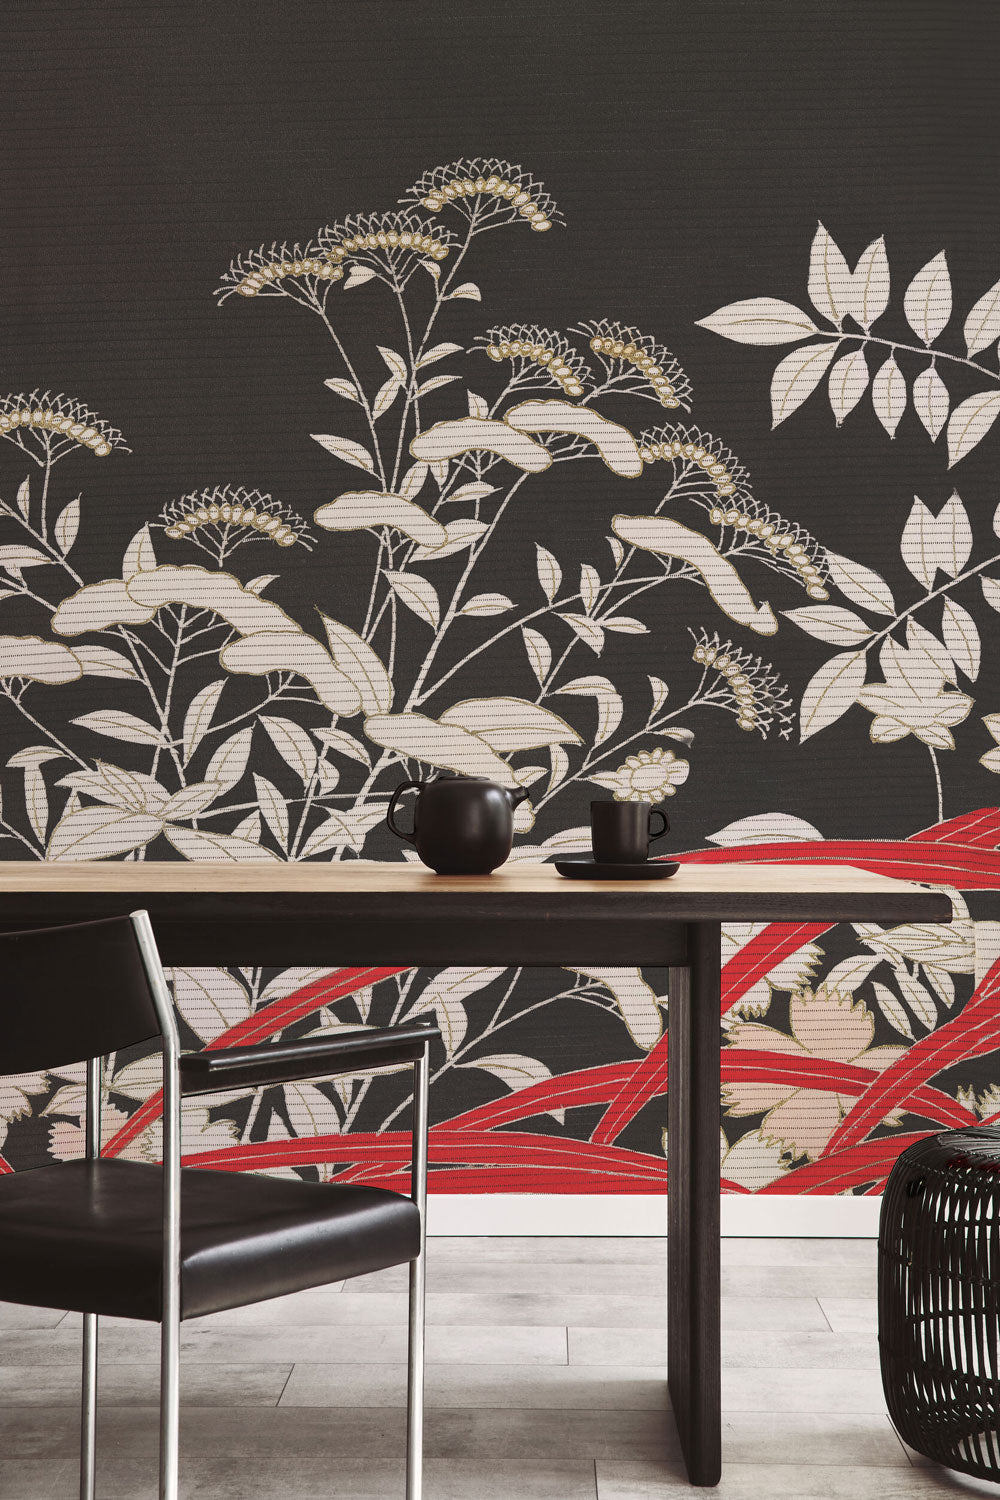 japense kimono wallpaper mural for a zen interior